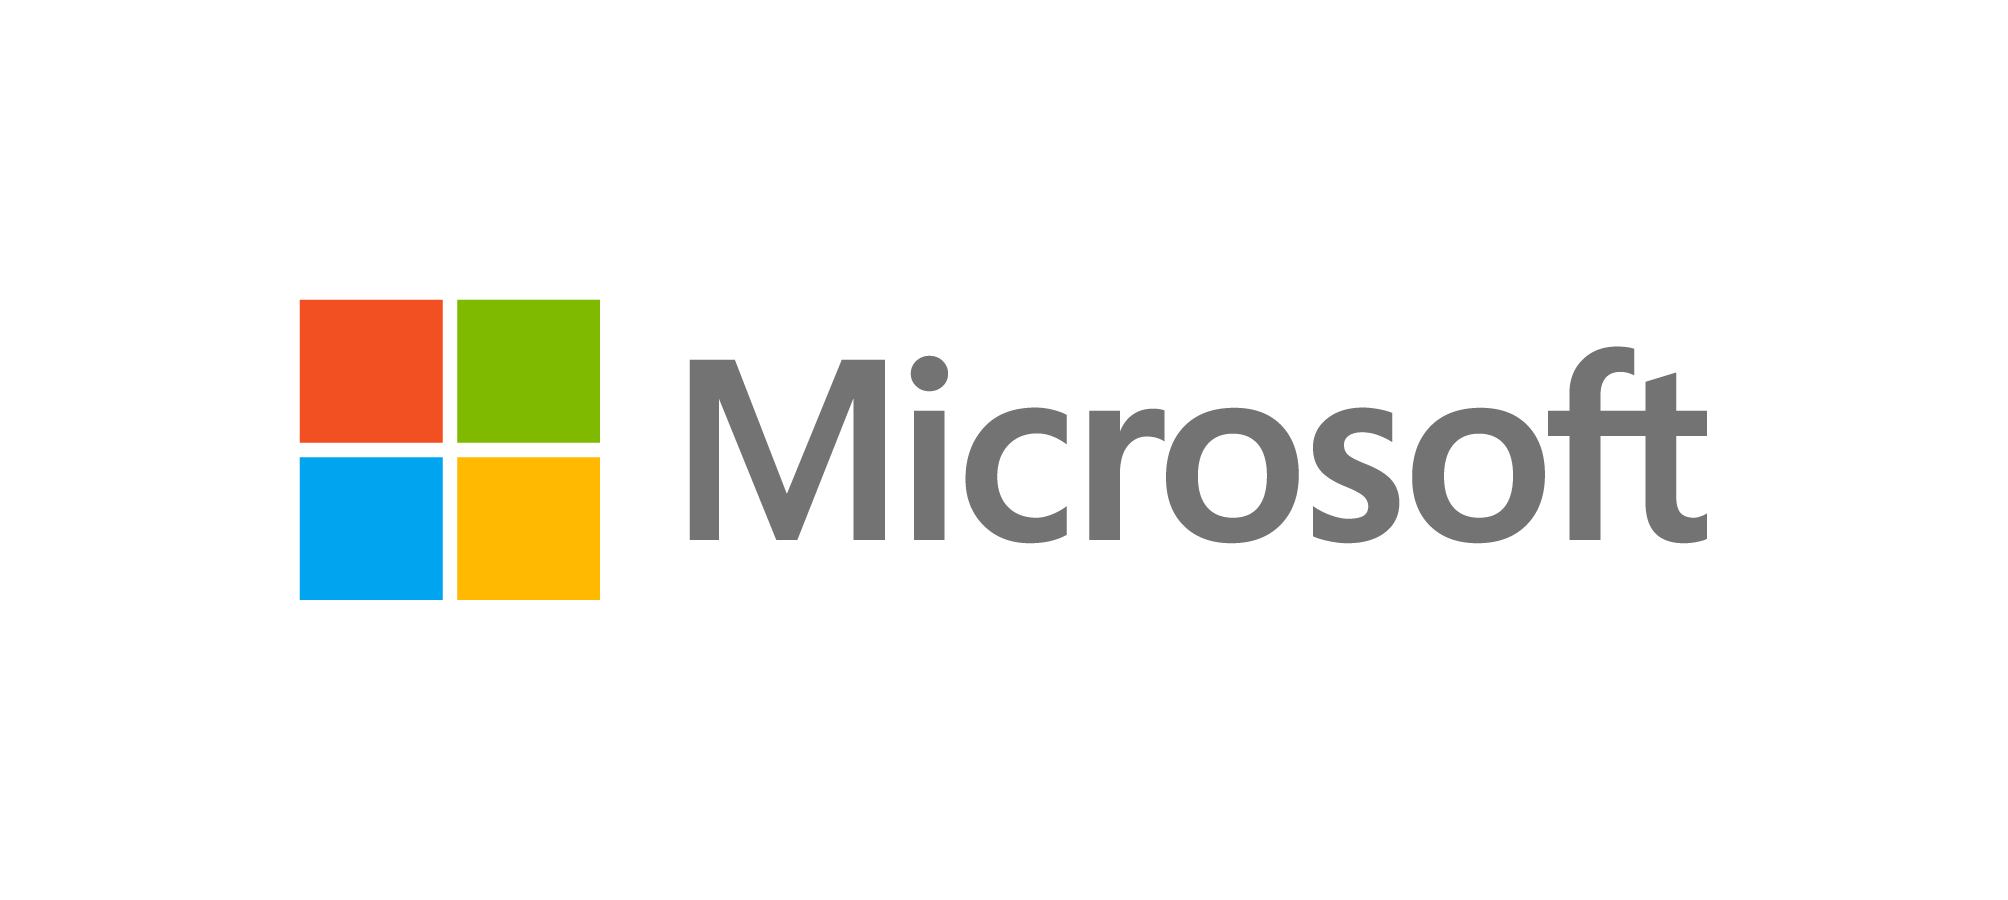 Microsoft-logo_rgb_c-gray-2